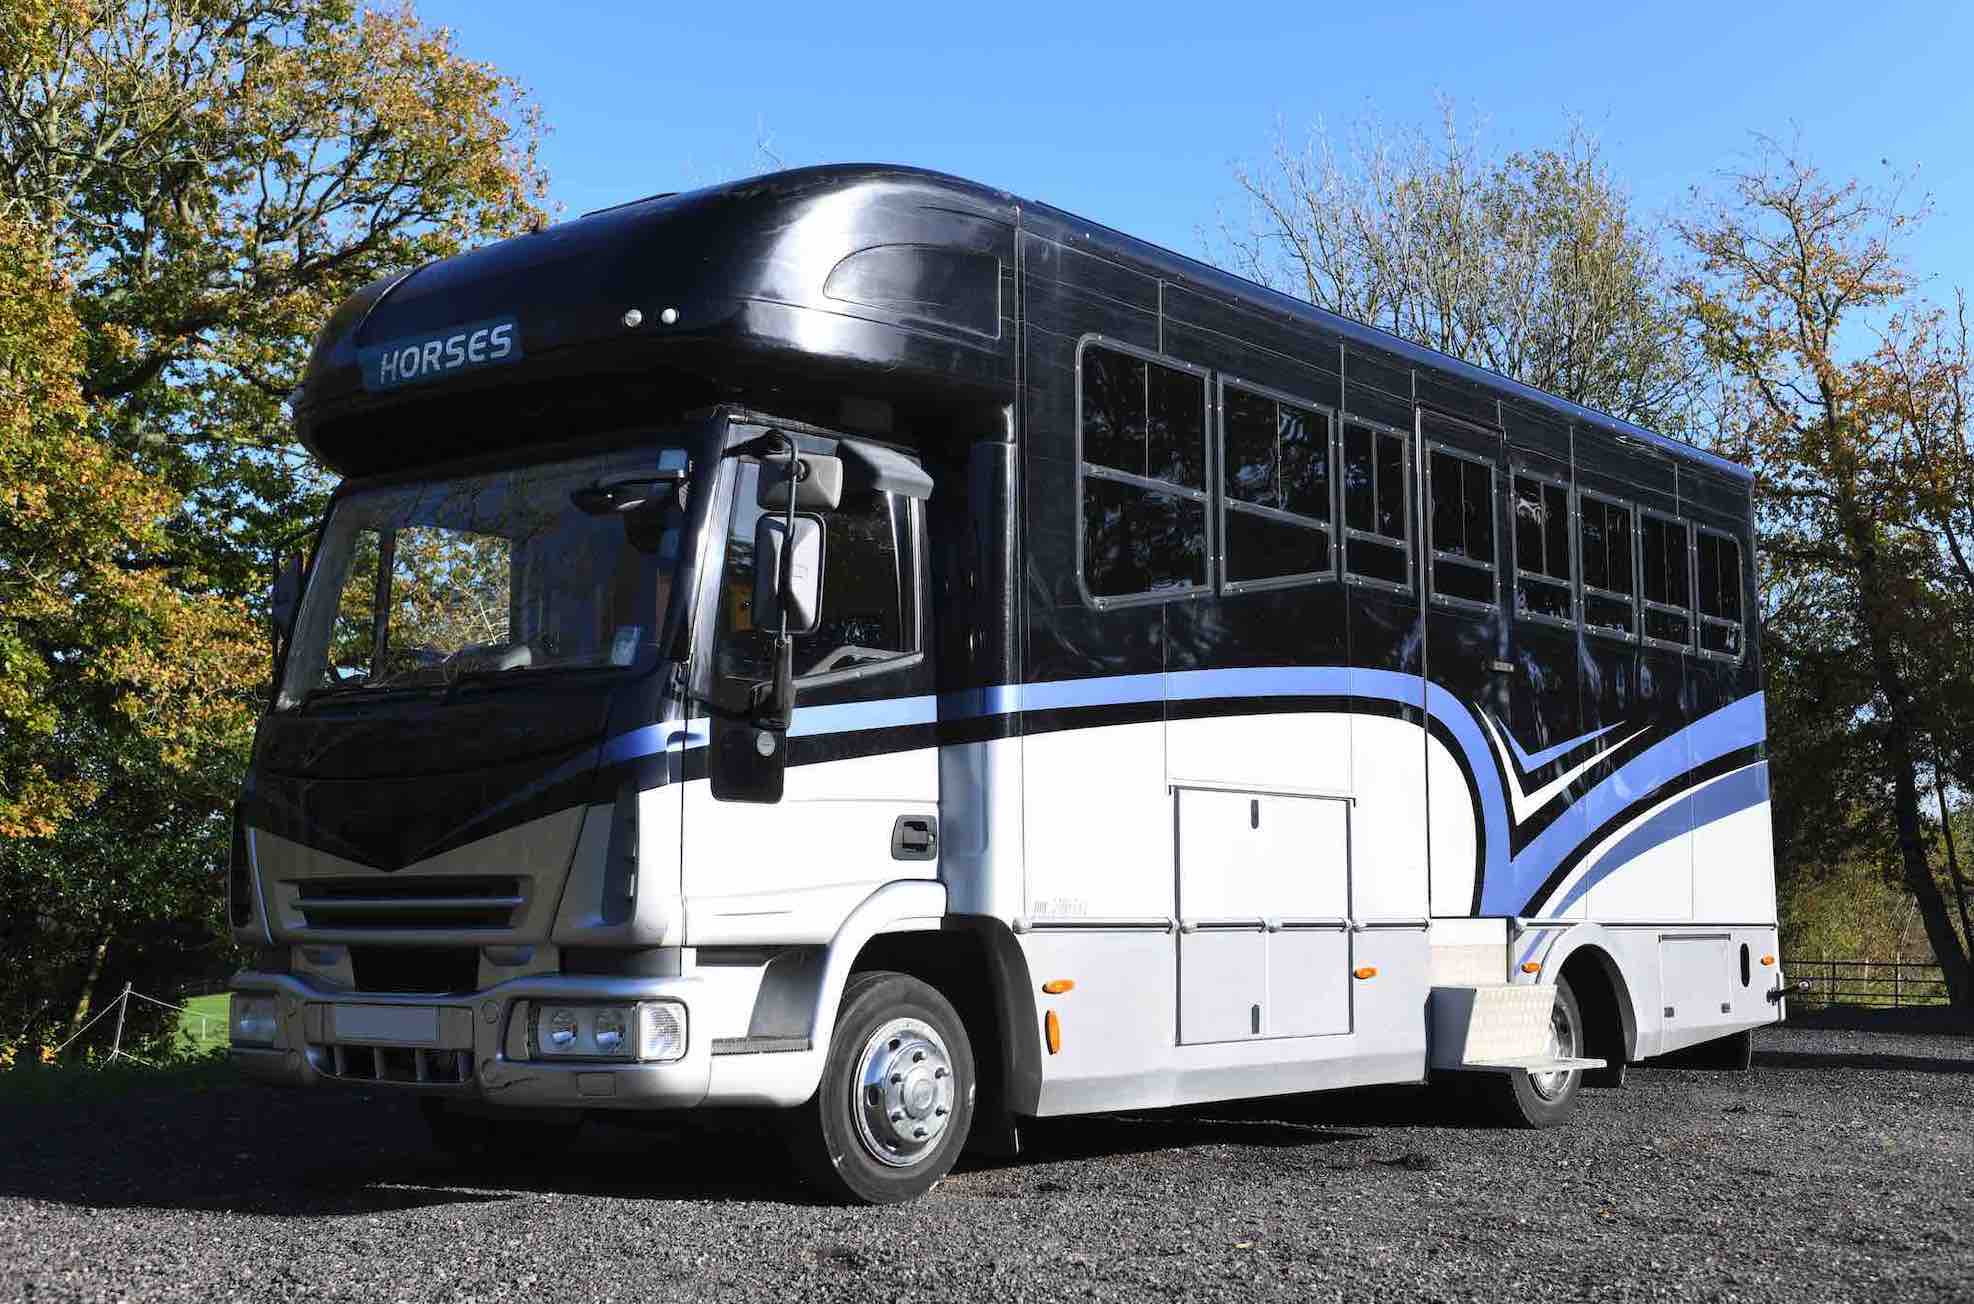 Lovely 7.5-tonne quality coach-built Whittaker Horsebox